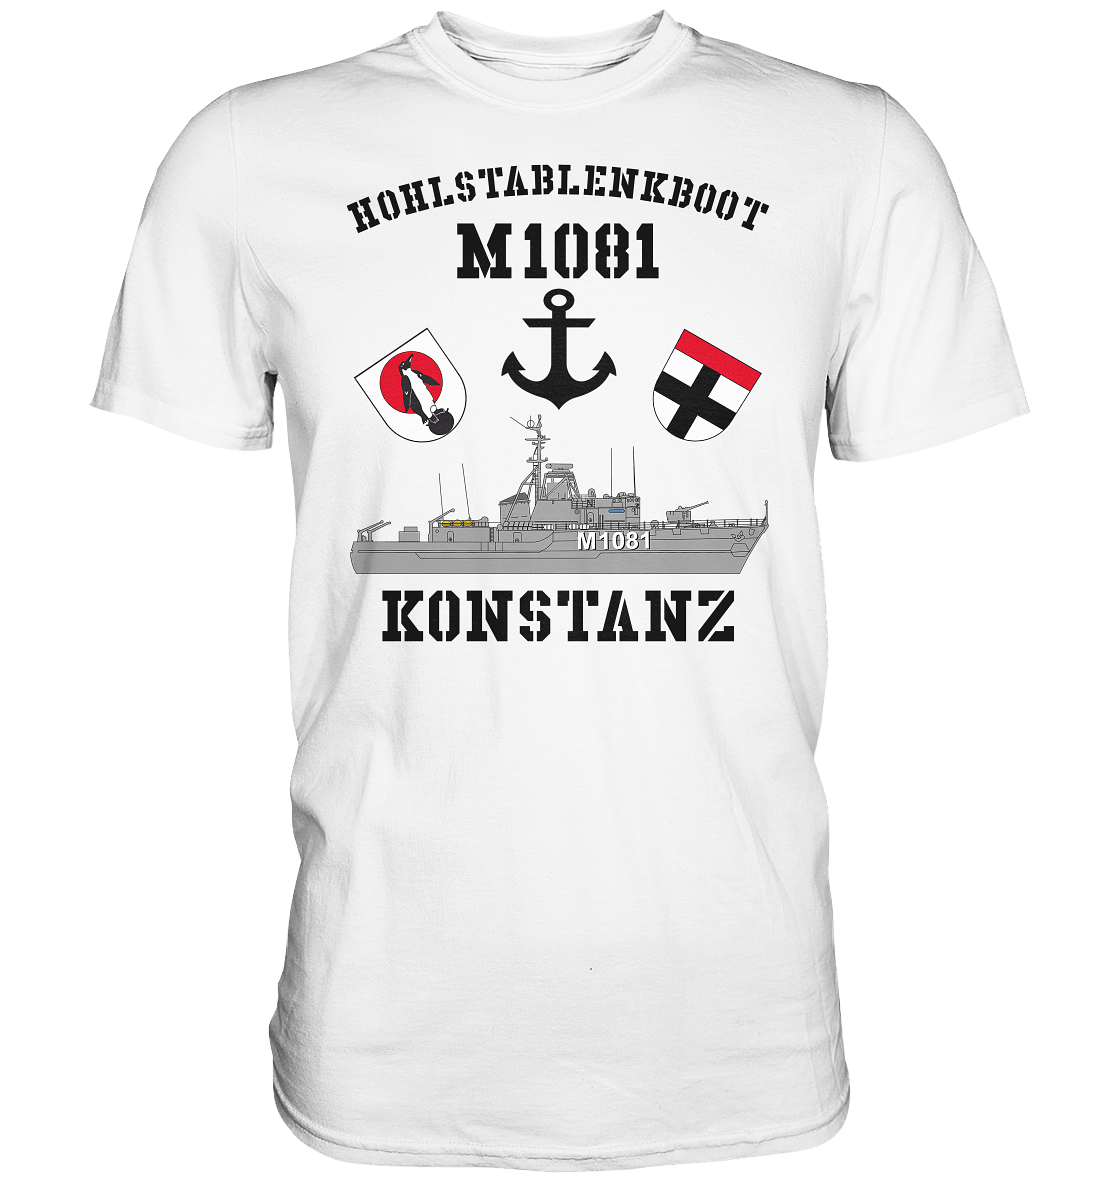 M1081 HL-Boot KONSTANZ - Premium Shirt